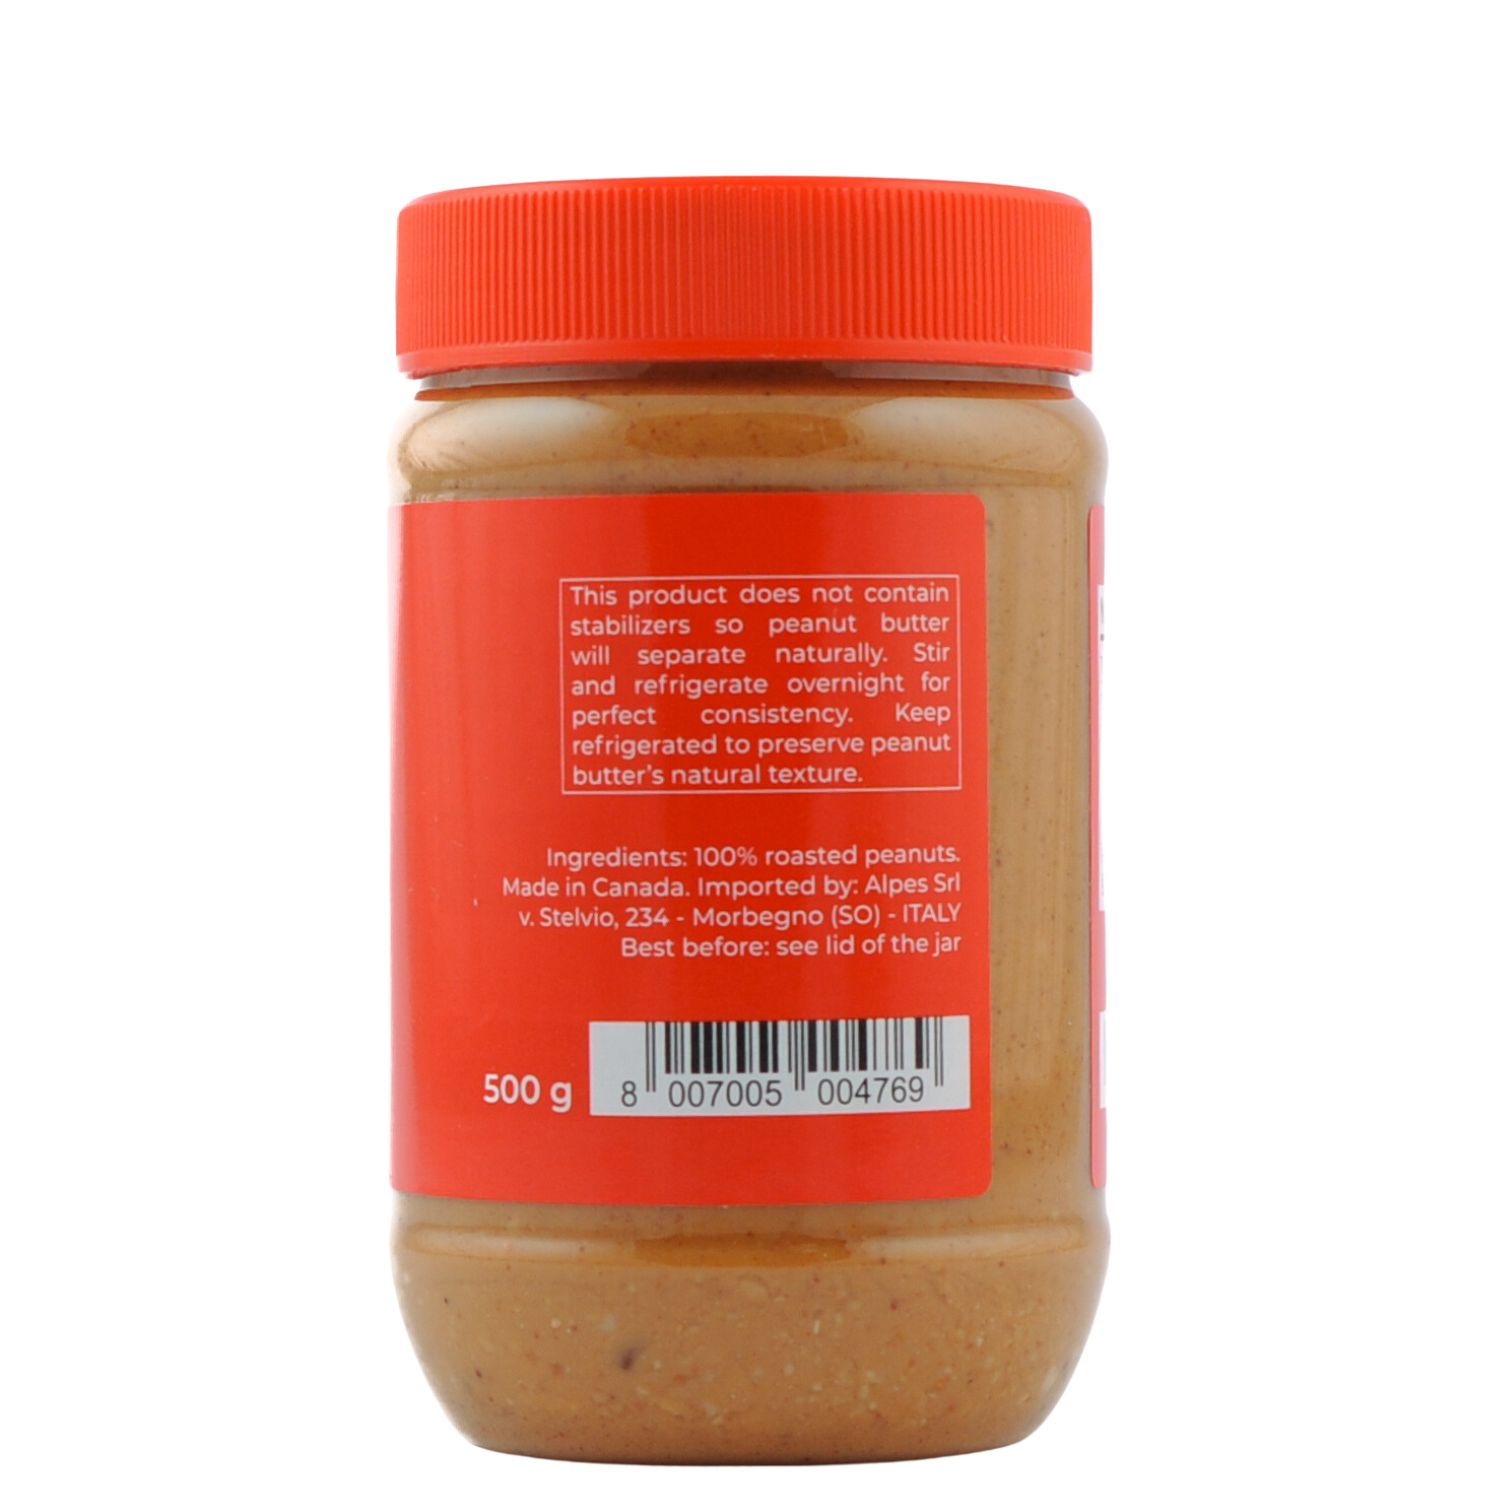 MapleFarm burro di arachidi croccante da 550g - ingredienti